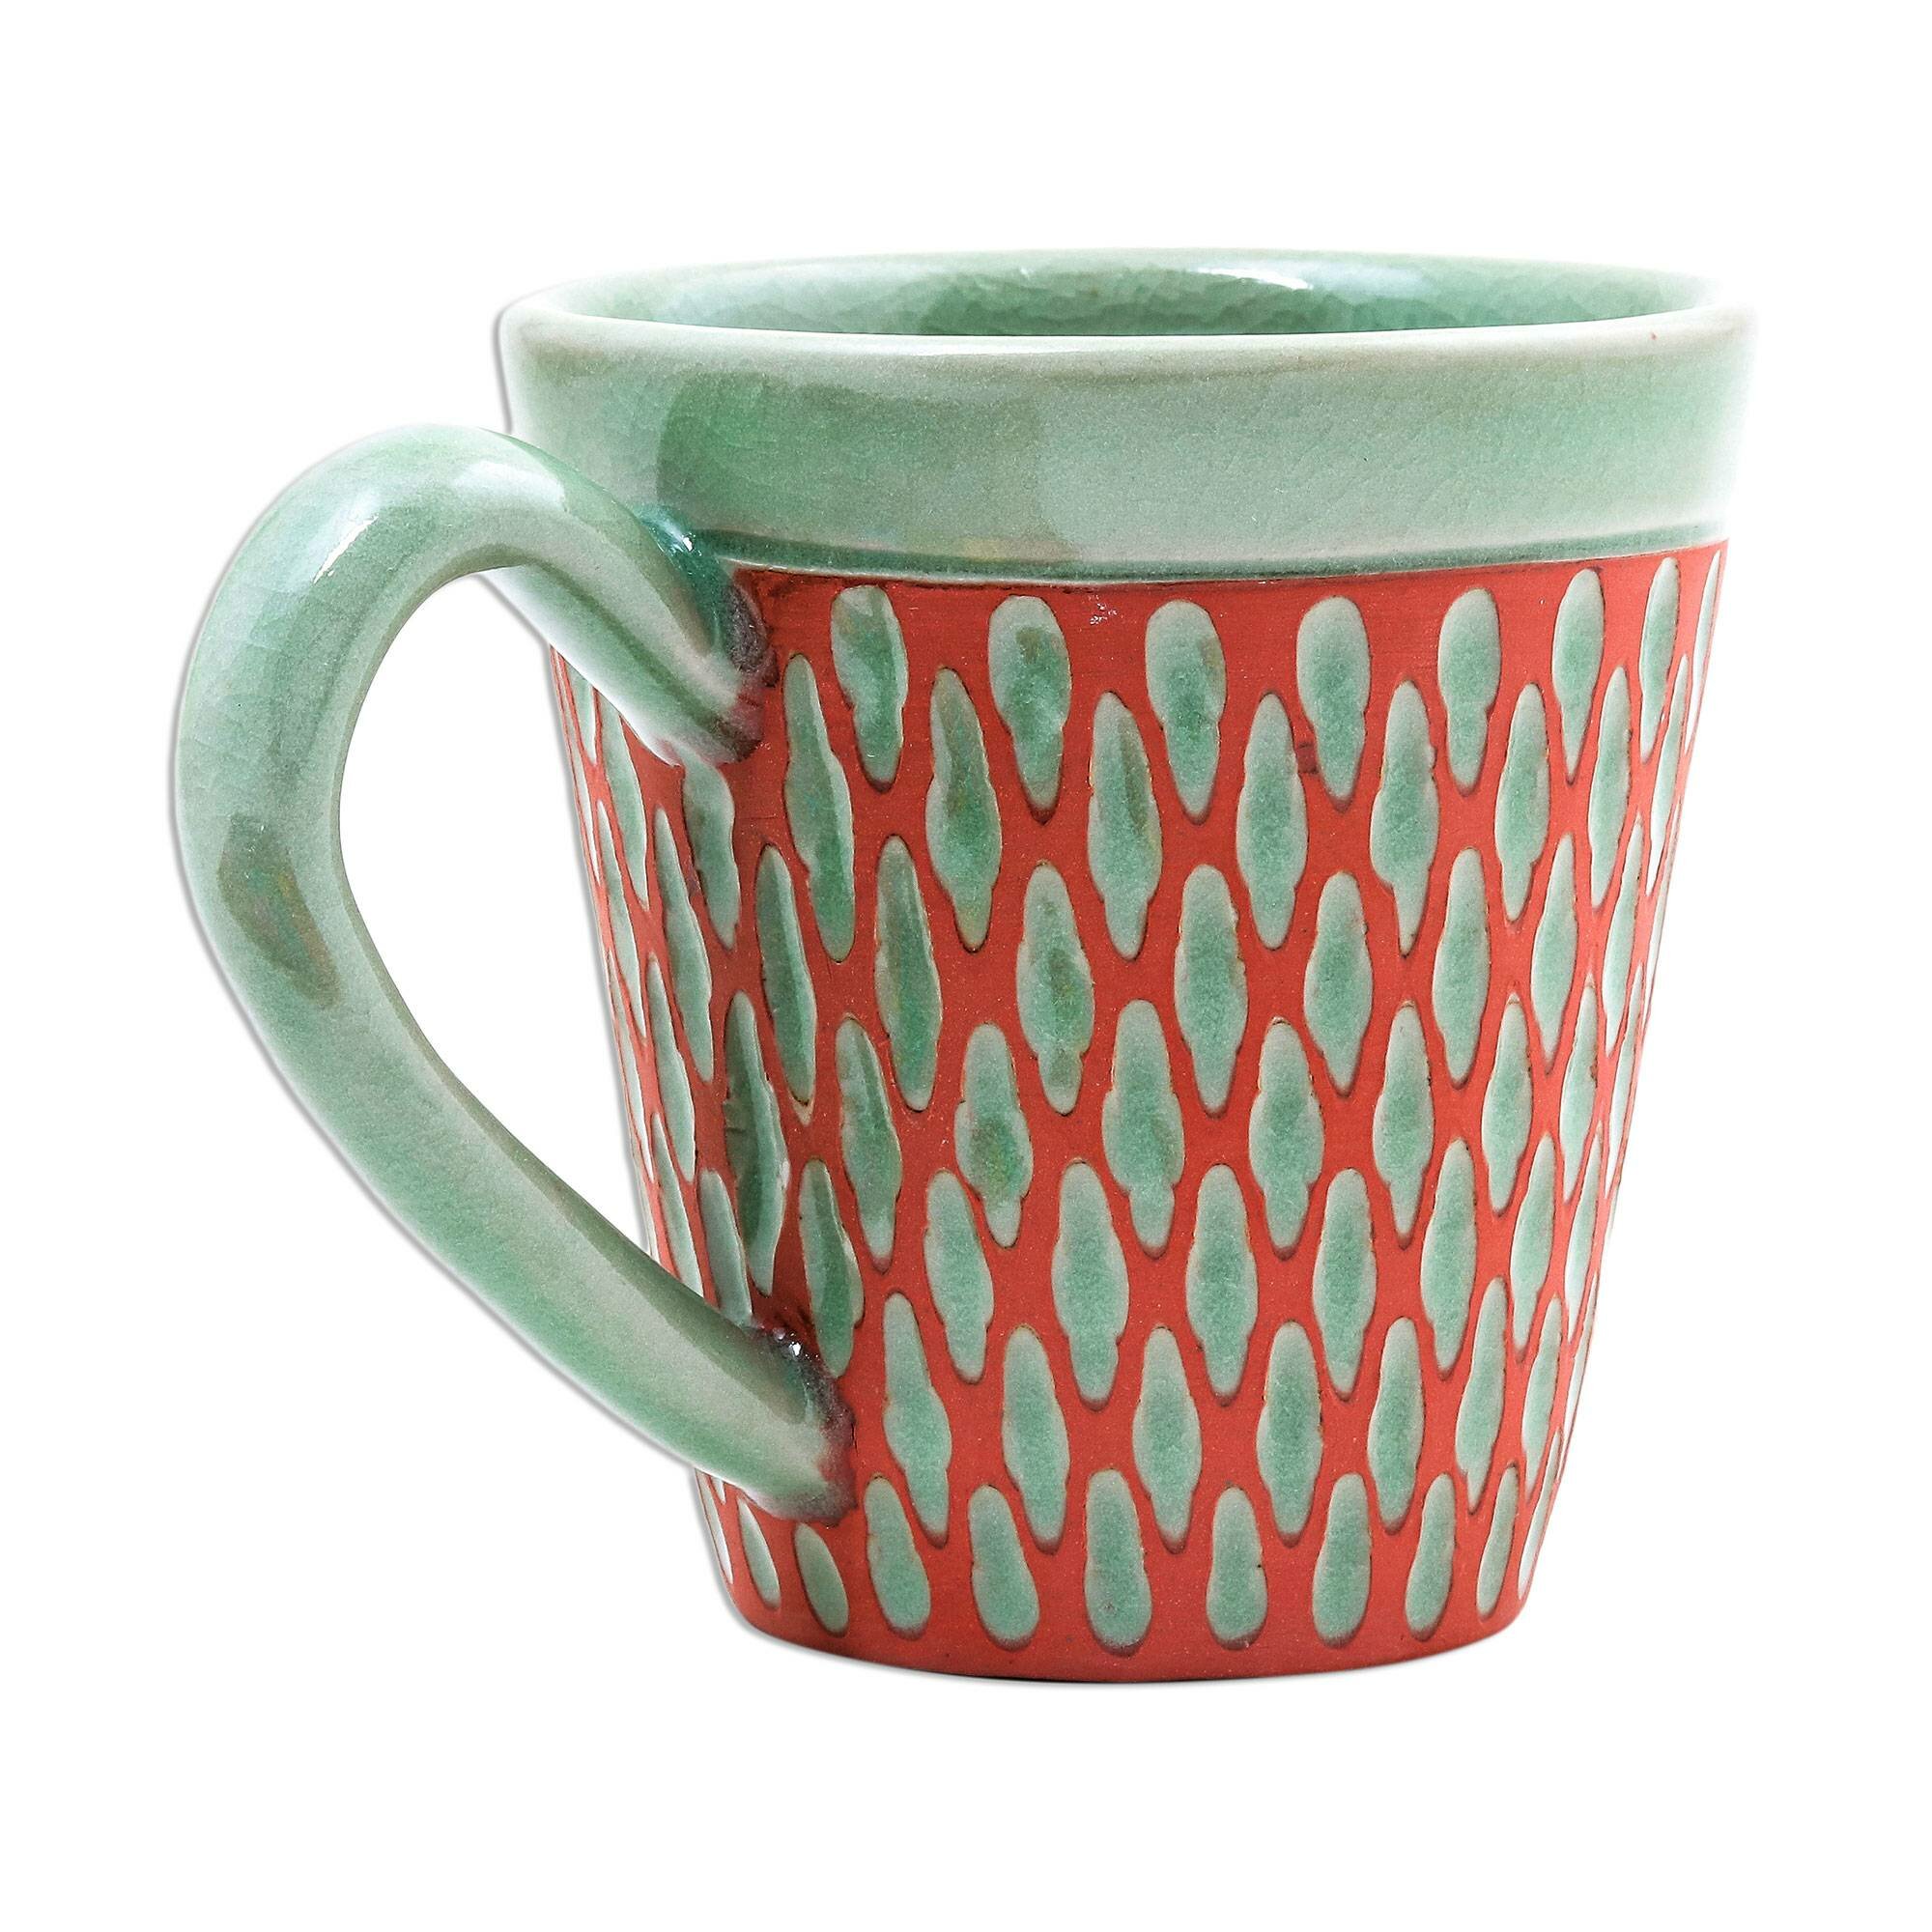 Dark Green/Jade Stacking Mugs Set of 4 Kitchen Home Dining Tea Coffee Cups